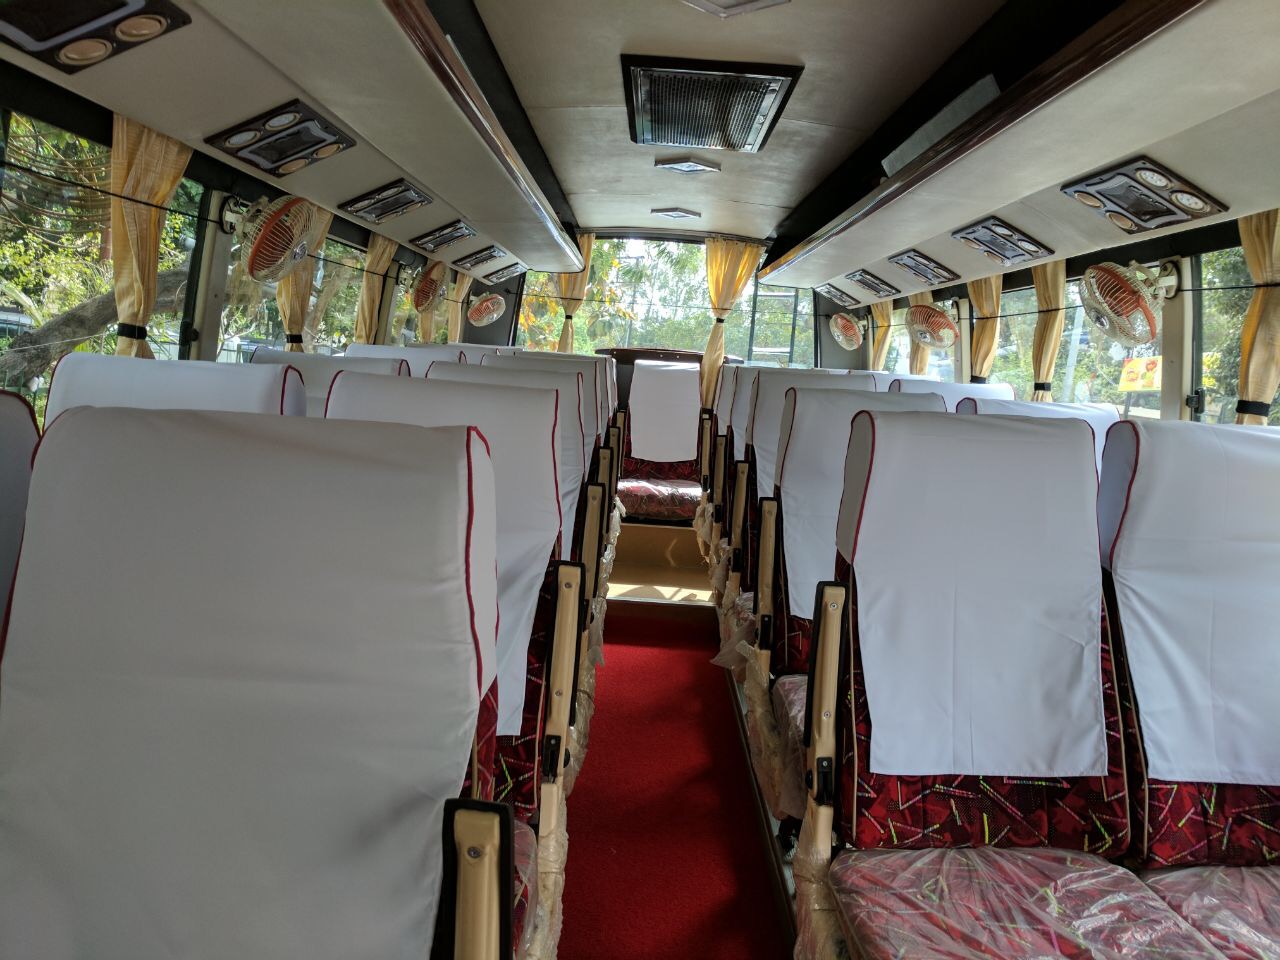 Bus Service for Chardham Yatra